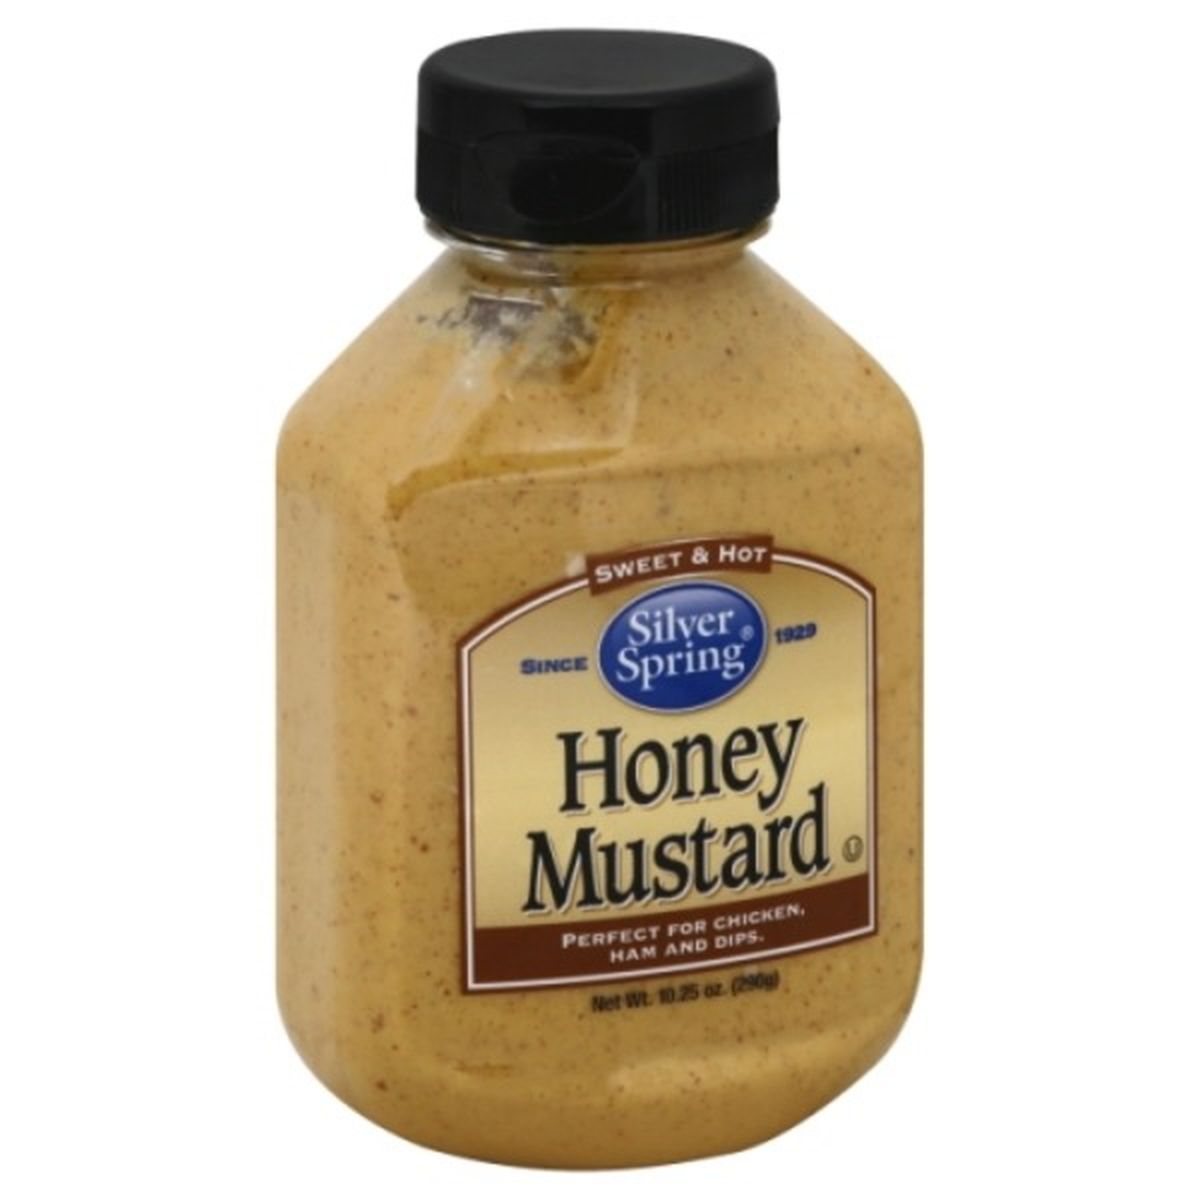 Calories in Silver Spring Honey Mustard, Sweet & Hot